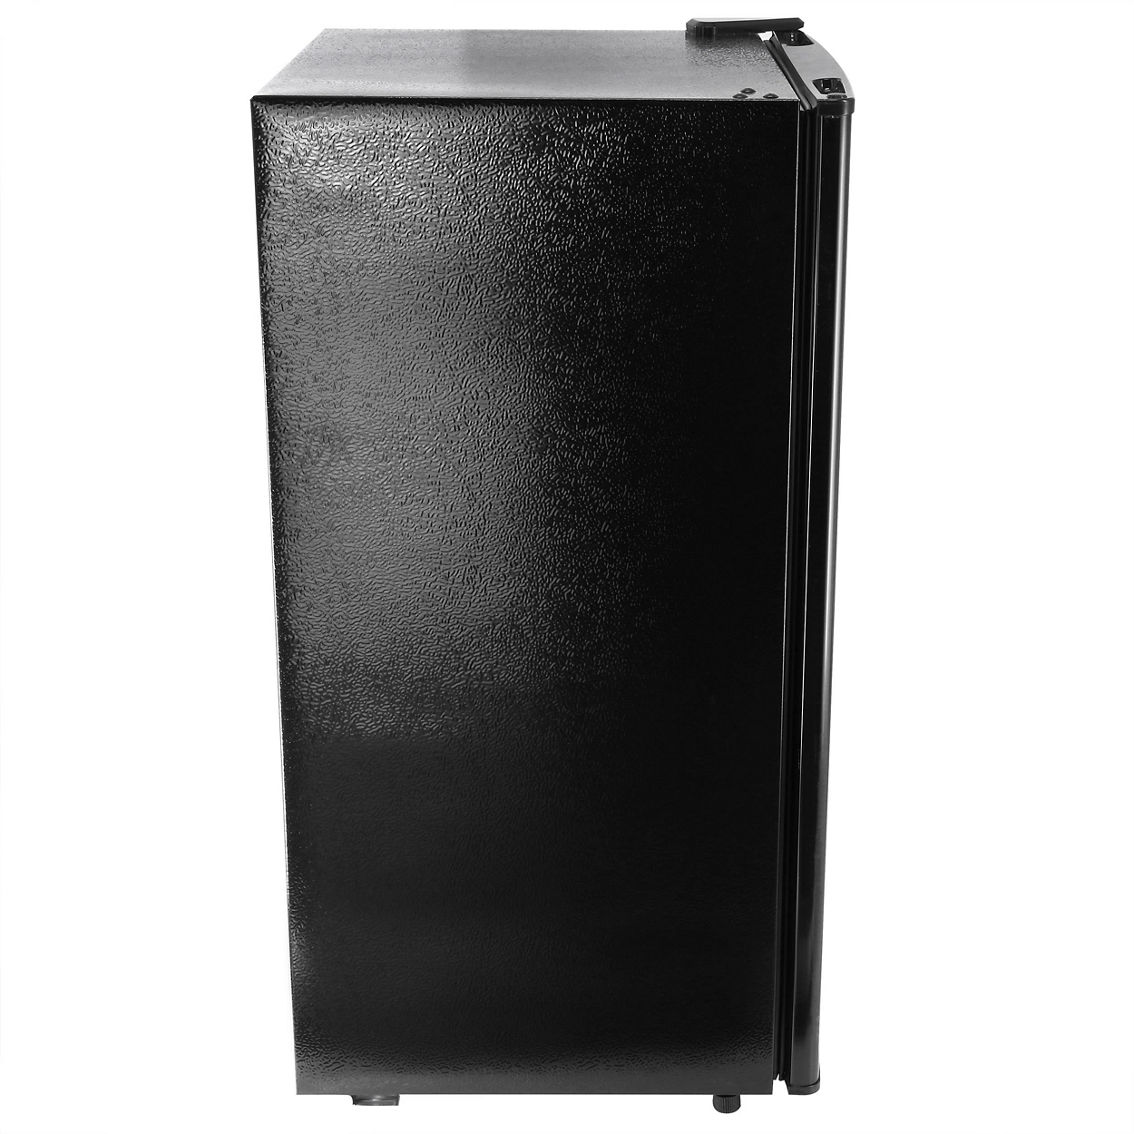 MegaChef 3.2 Cubic Feet Refrigerator in Black - Image 4 of 5